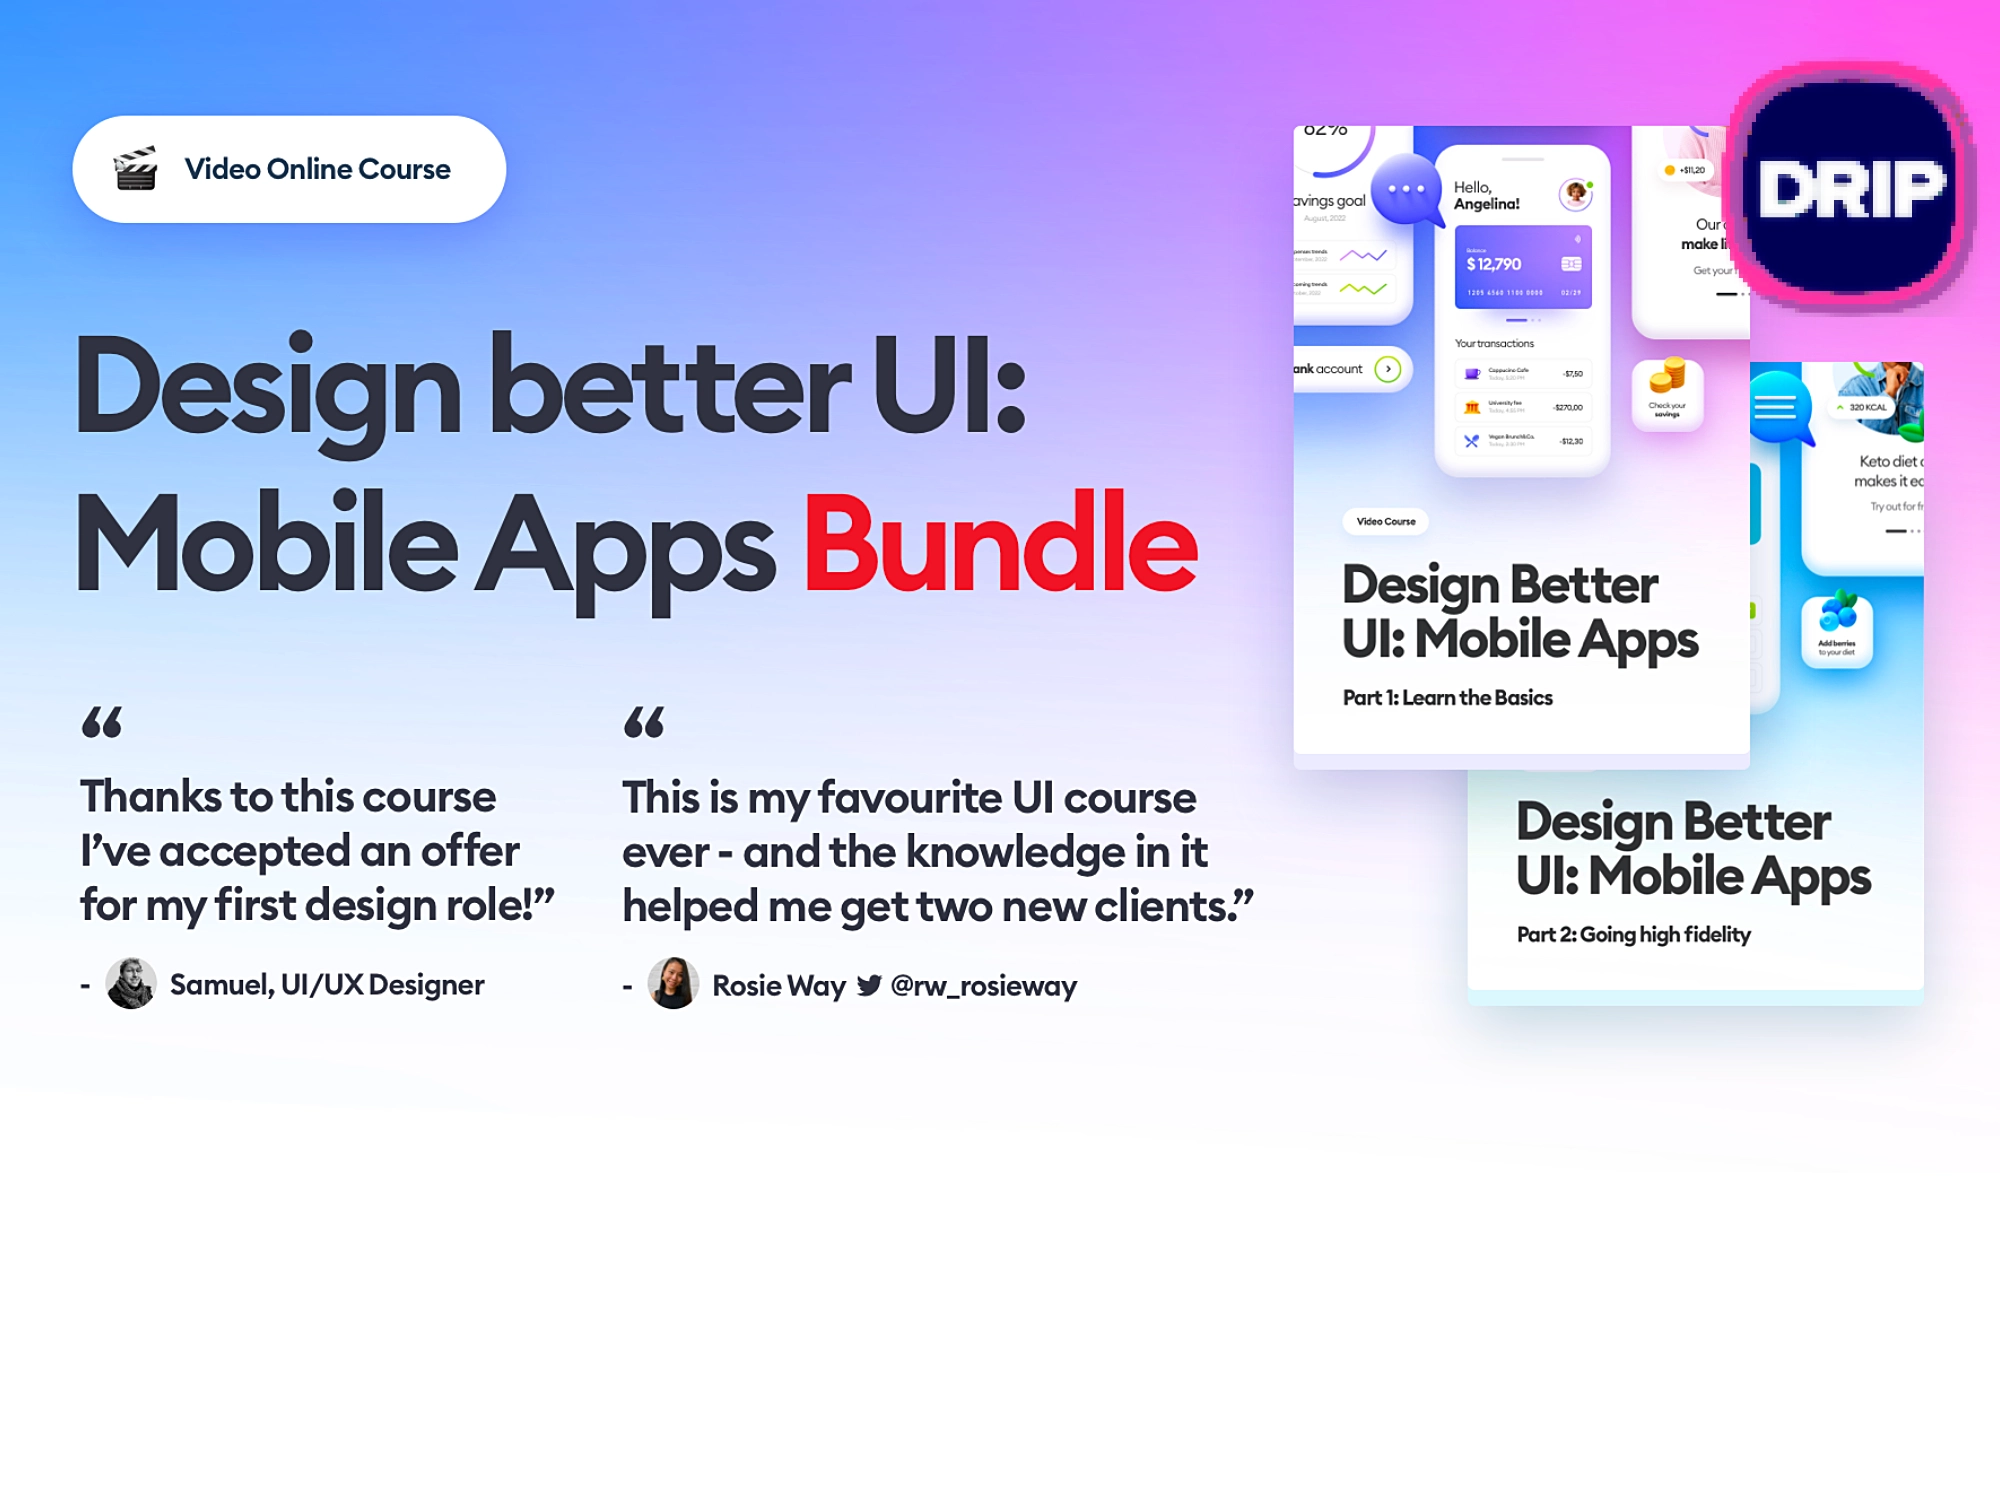 [VIP] Hype4 Academy: Design Better UI Mobile Apps (BUNDLE - PART 1&2)